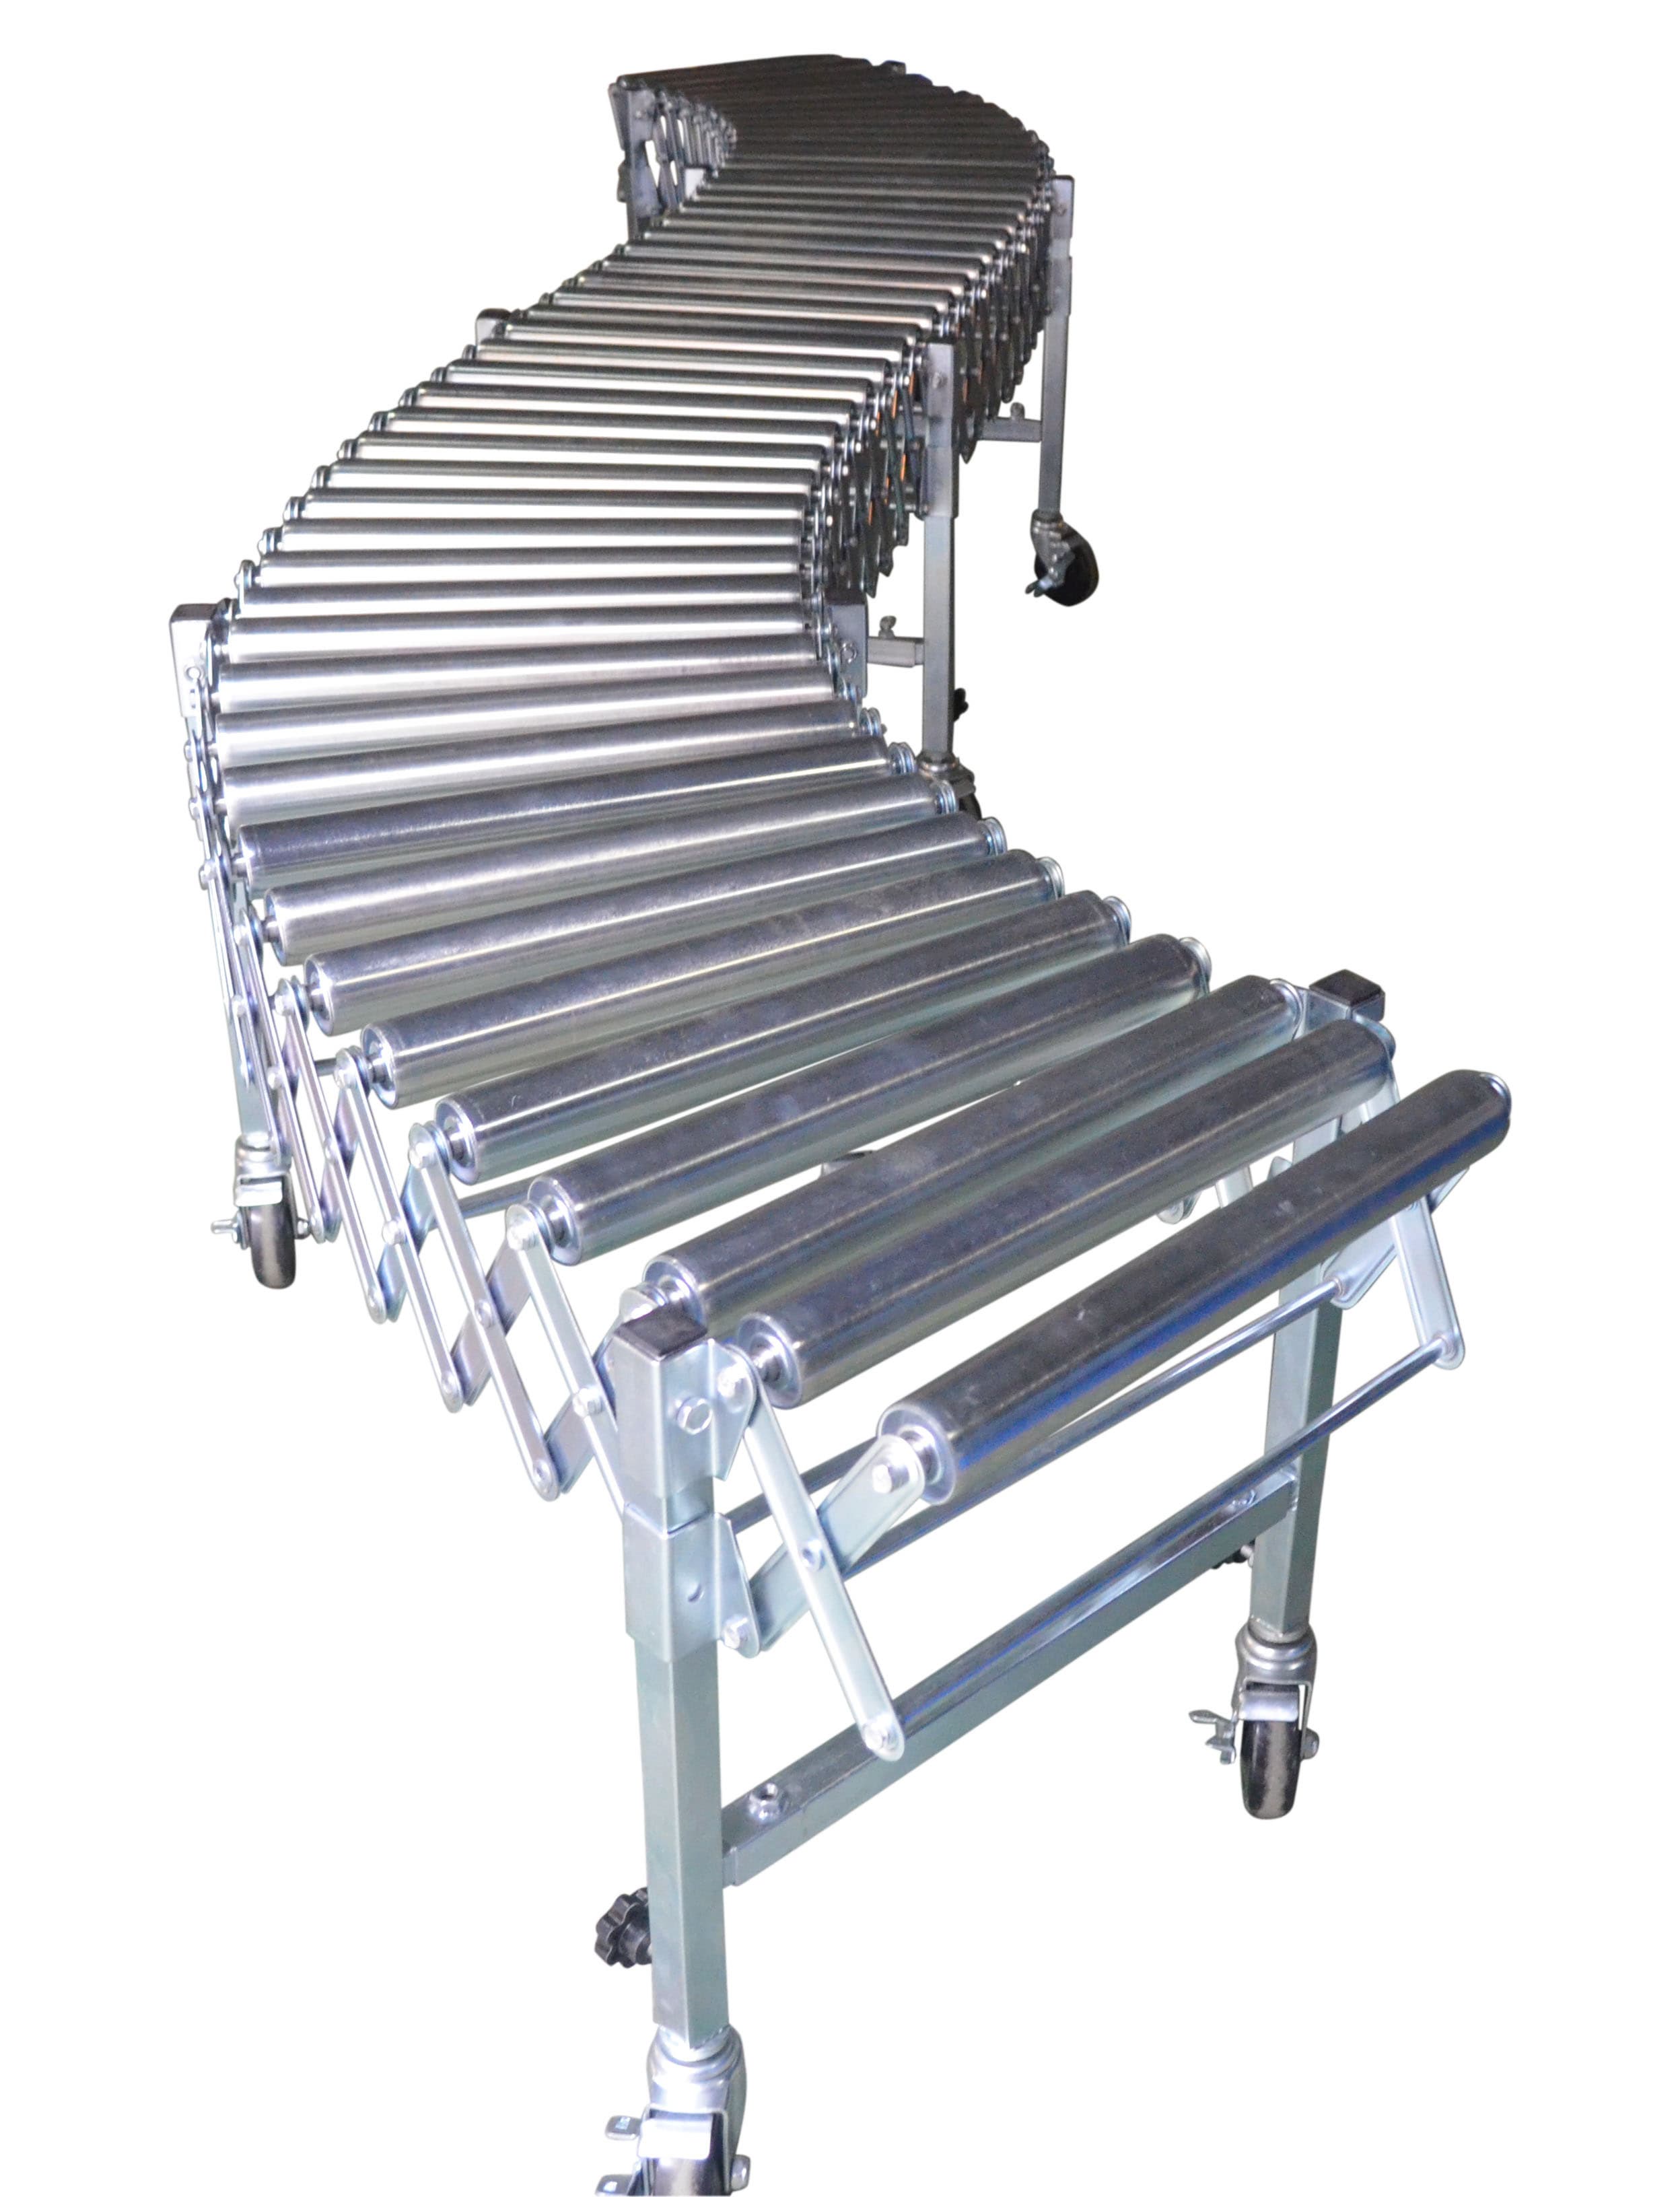 Flexible steel roller conveyor